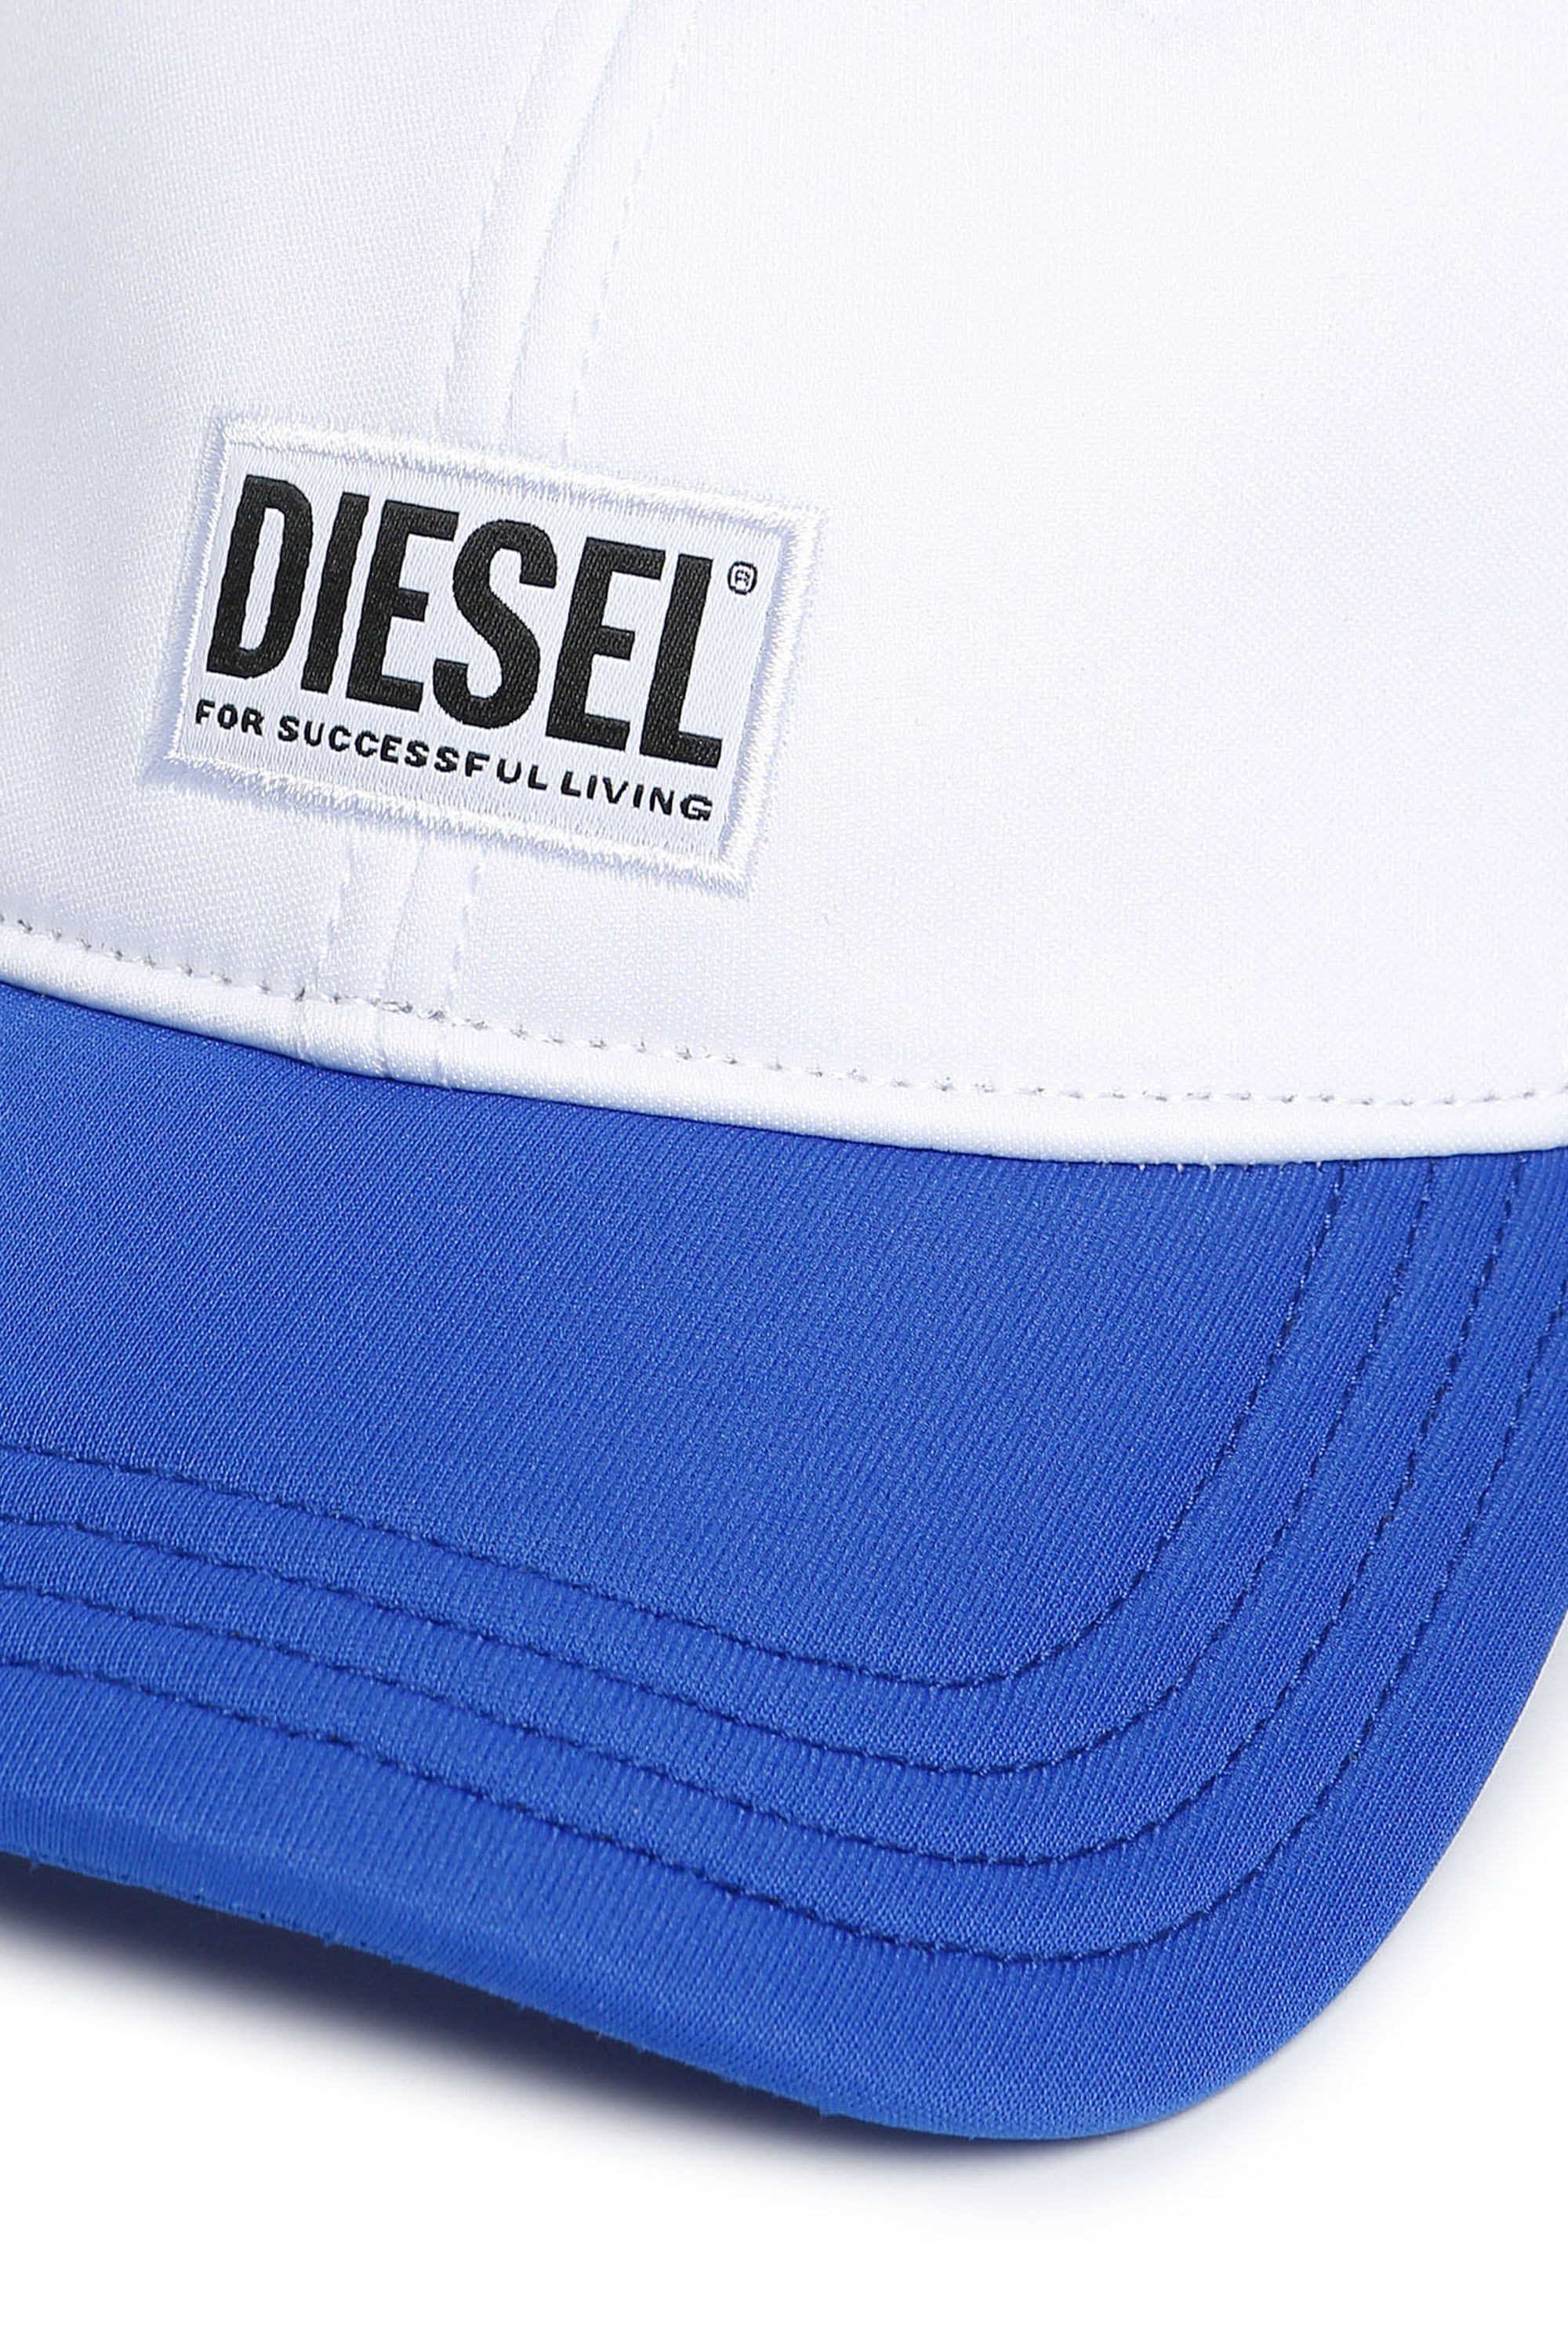 Diesel - FDURBO, Blanco/Azul marino - Image 3